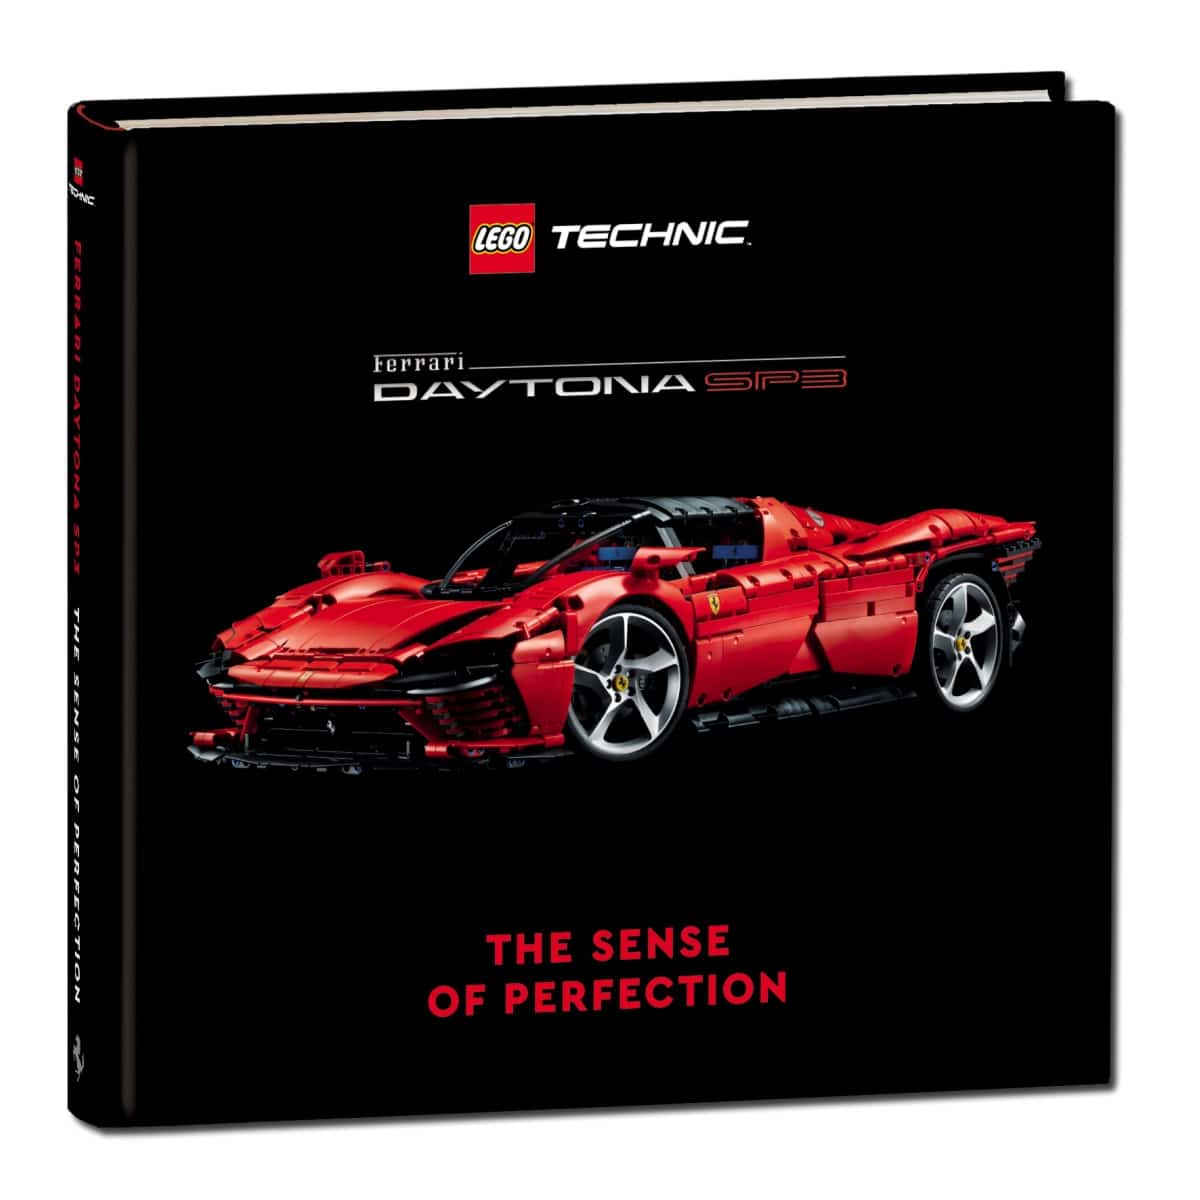 Ferrari Daytona Sp3 The Sense Of Perfection 5007627